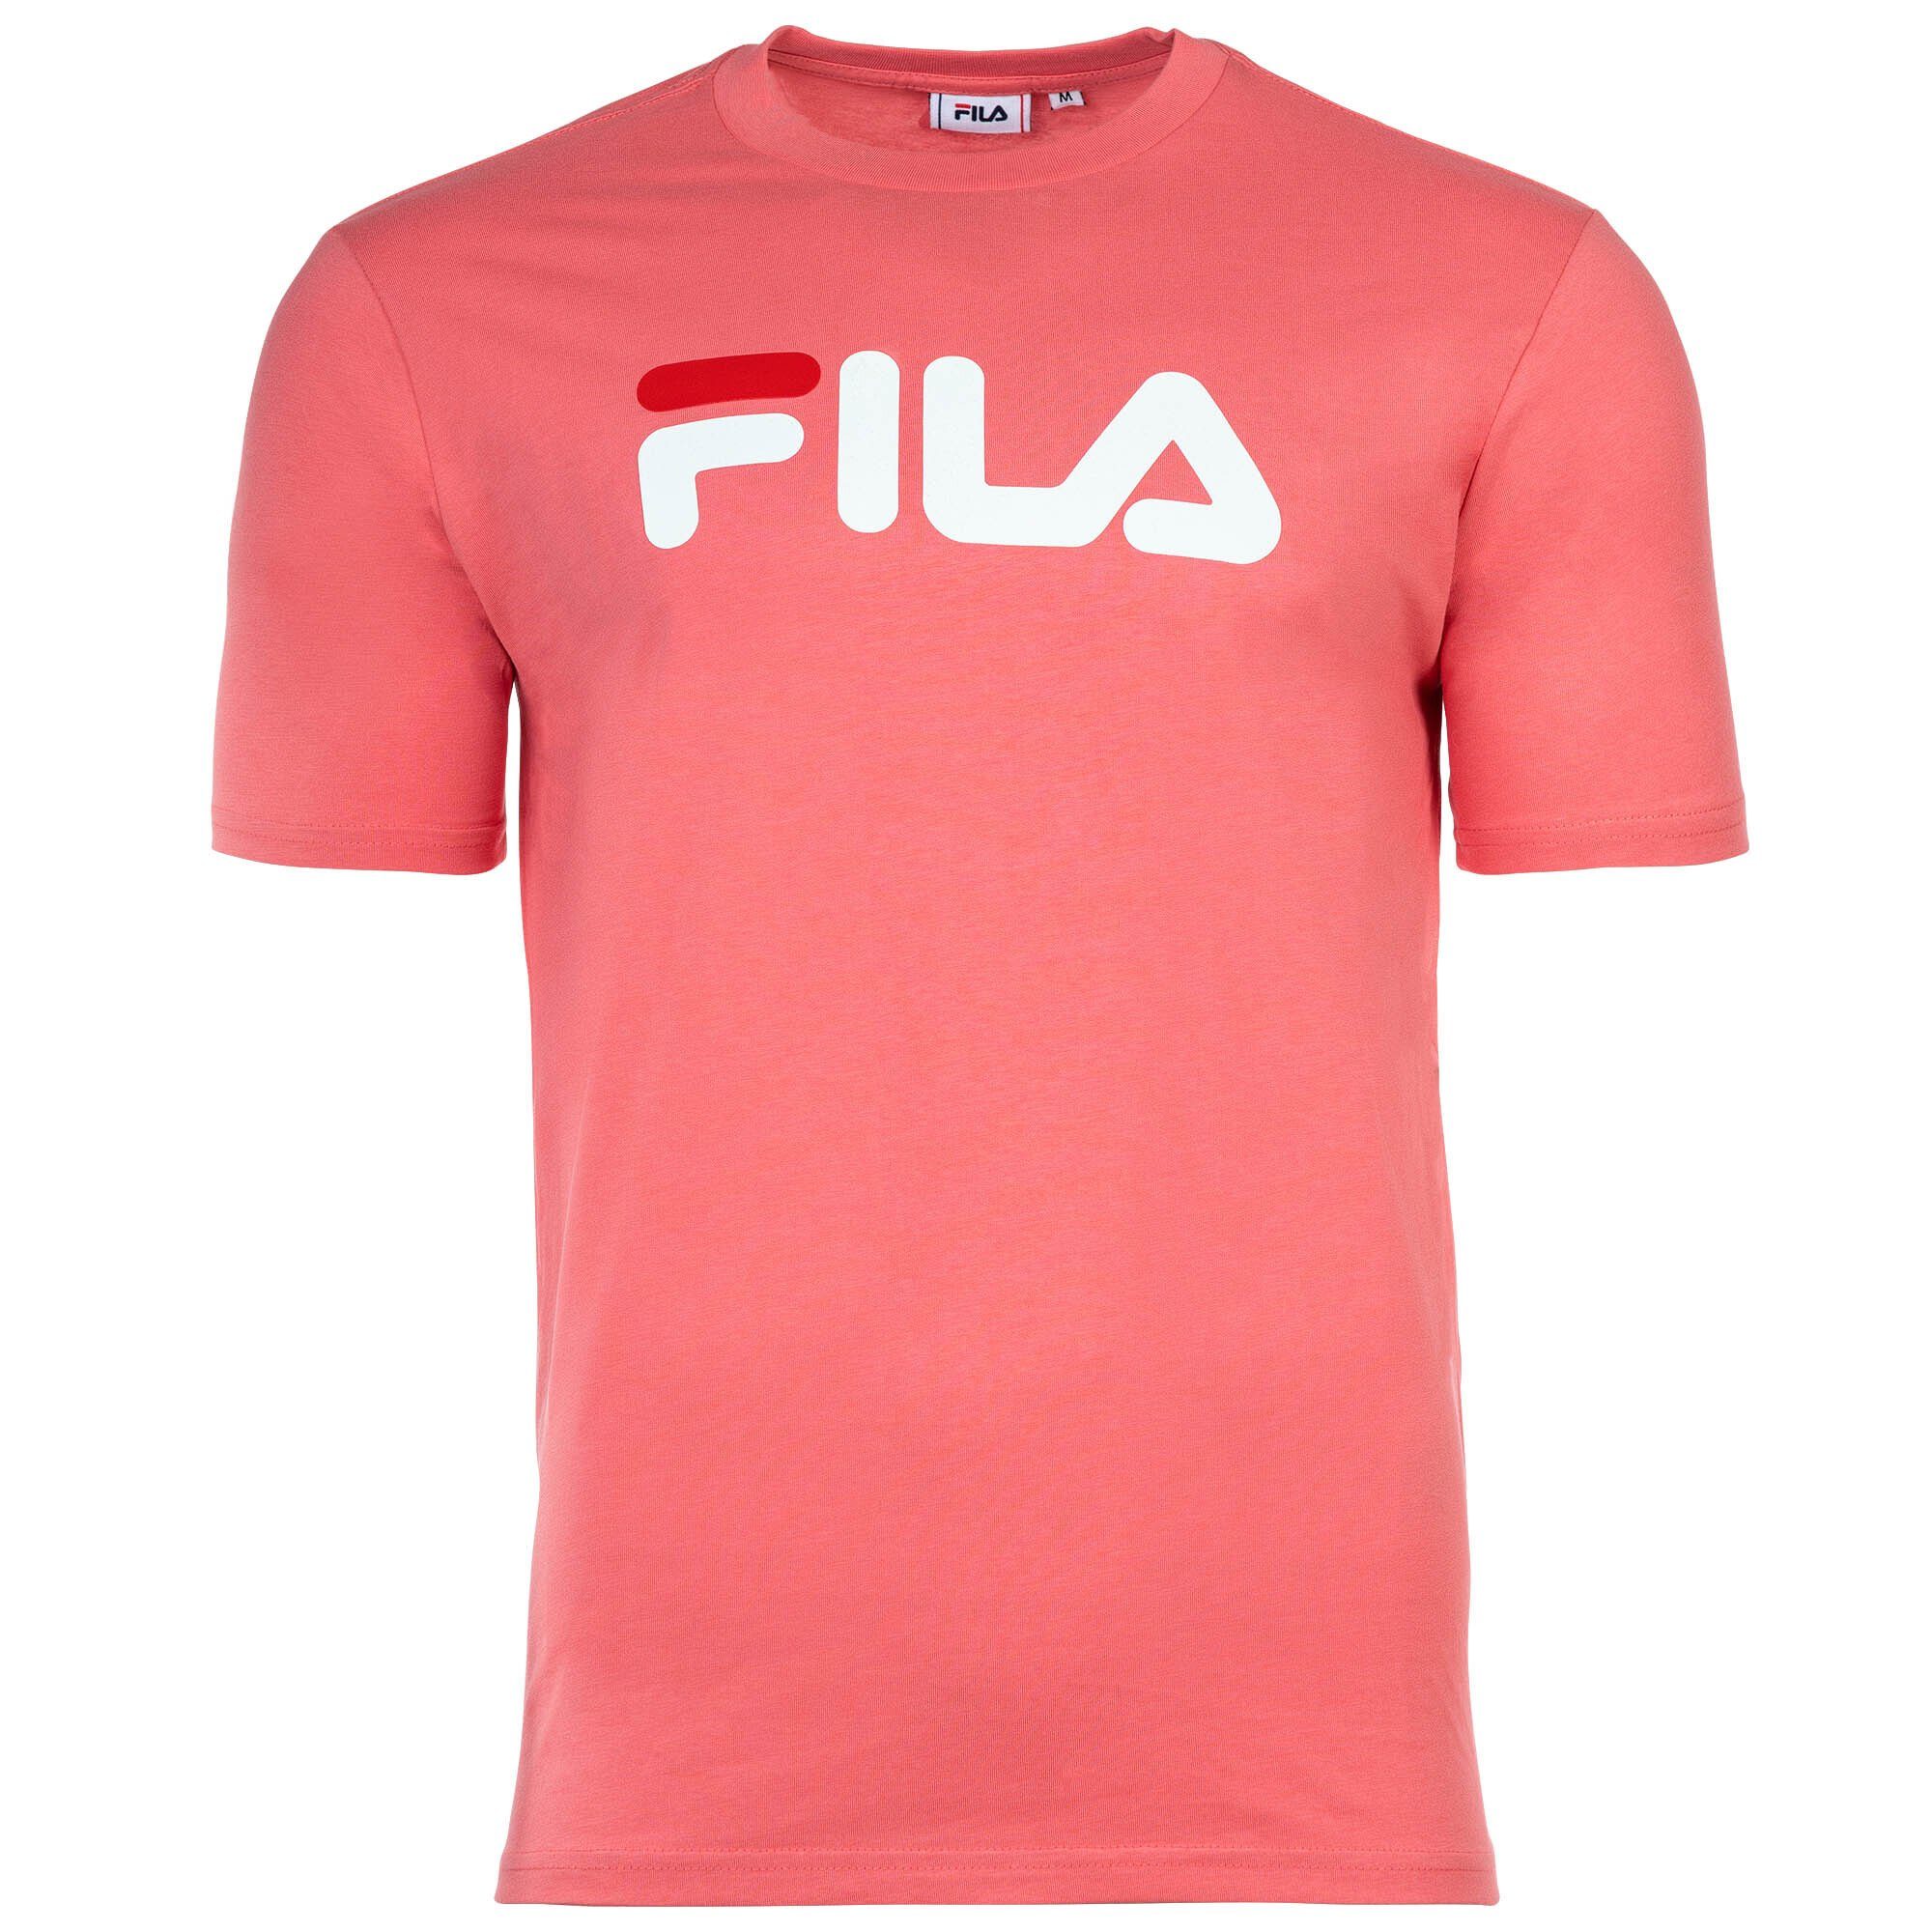 Fila T-Shirt Unisex T-Shirt - BELLANO tee, Rundhals, Kurzarm Rosa